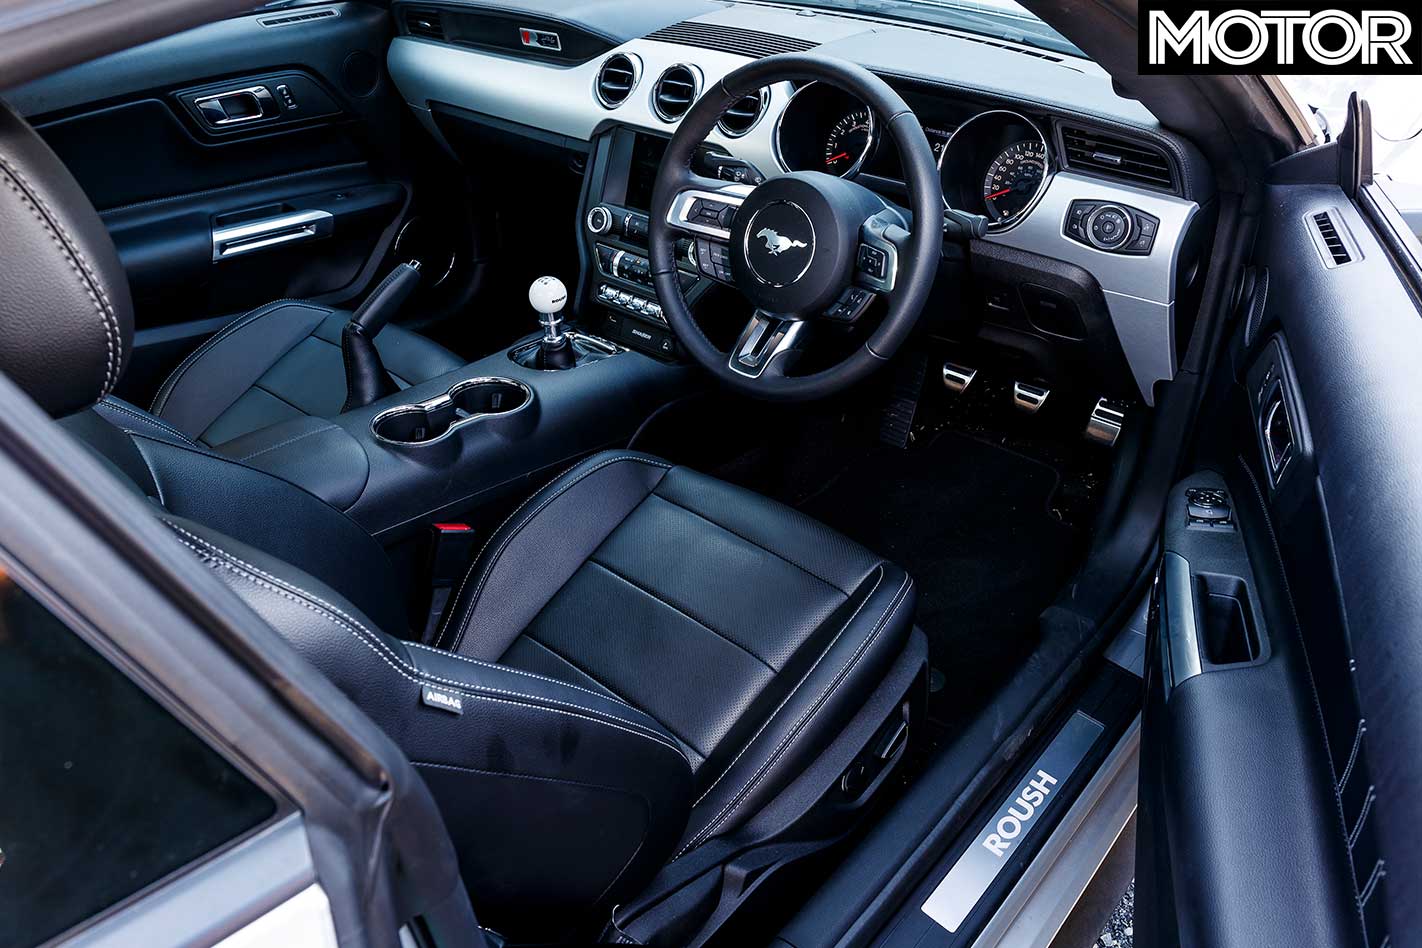 2018 ROUSH Mustang RS3 interior